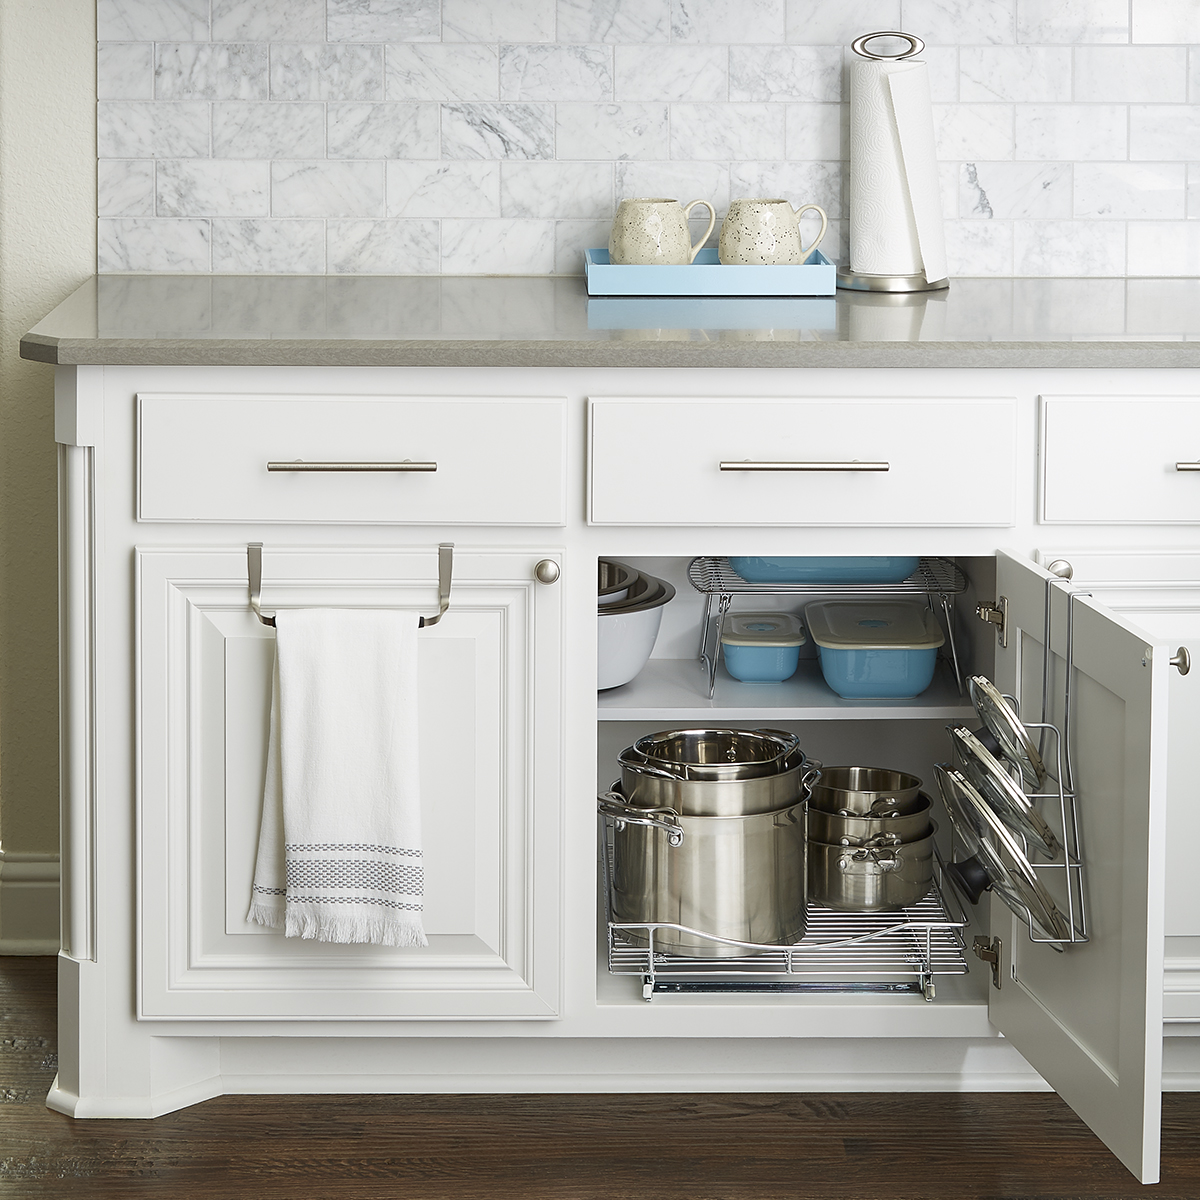 Bronze InterDesign Axis Over-The-Cabinet Kitchen Dish Towel Holder Loop